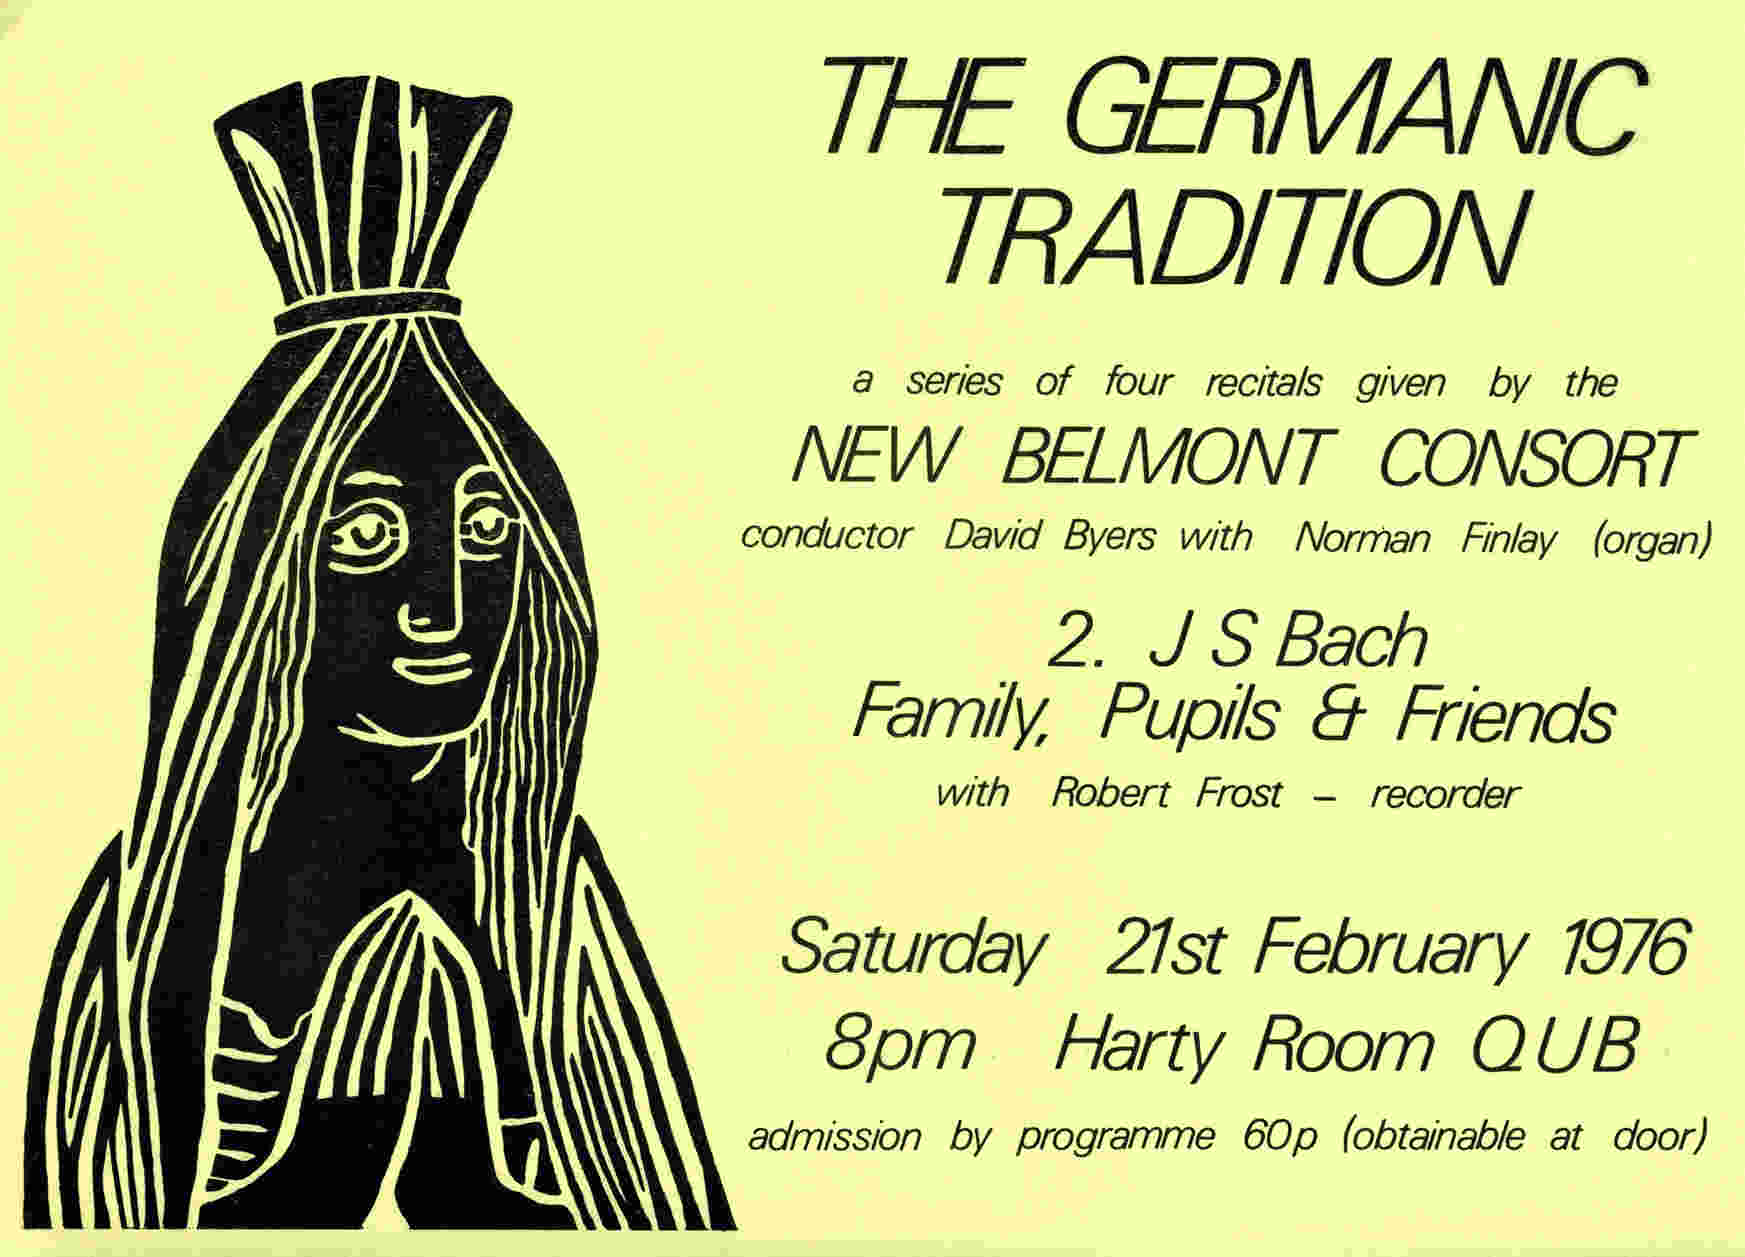 New Belmont Consort Germanic 2